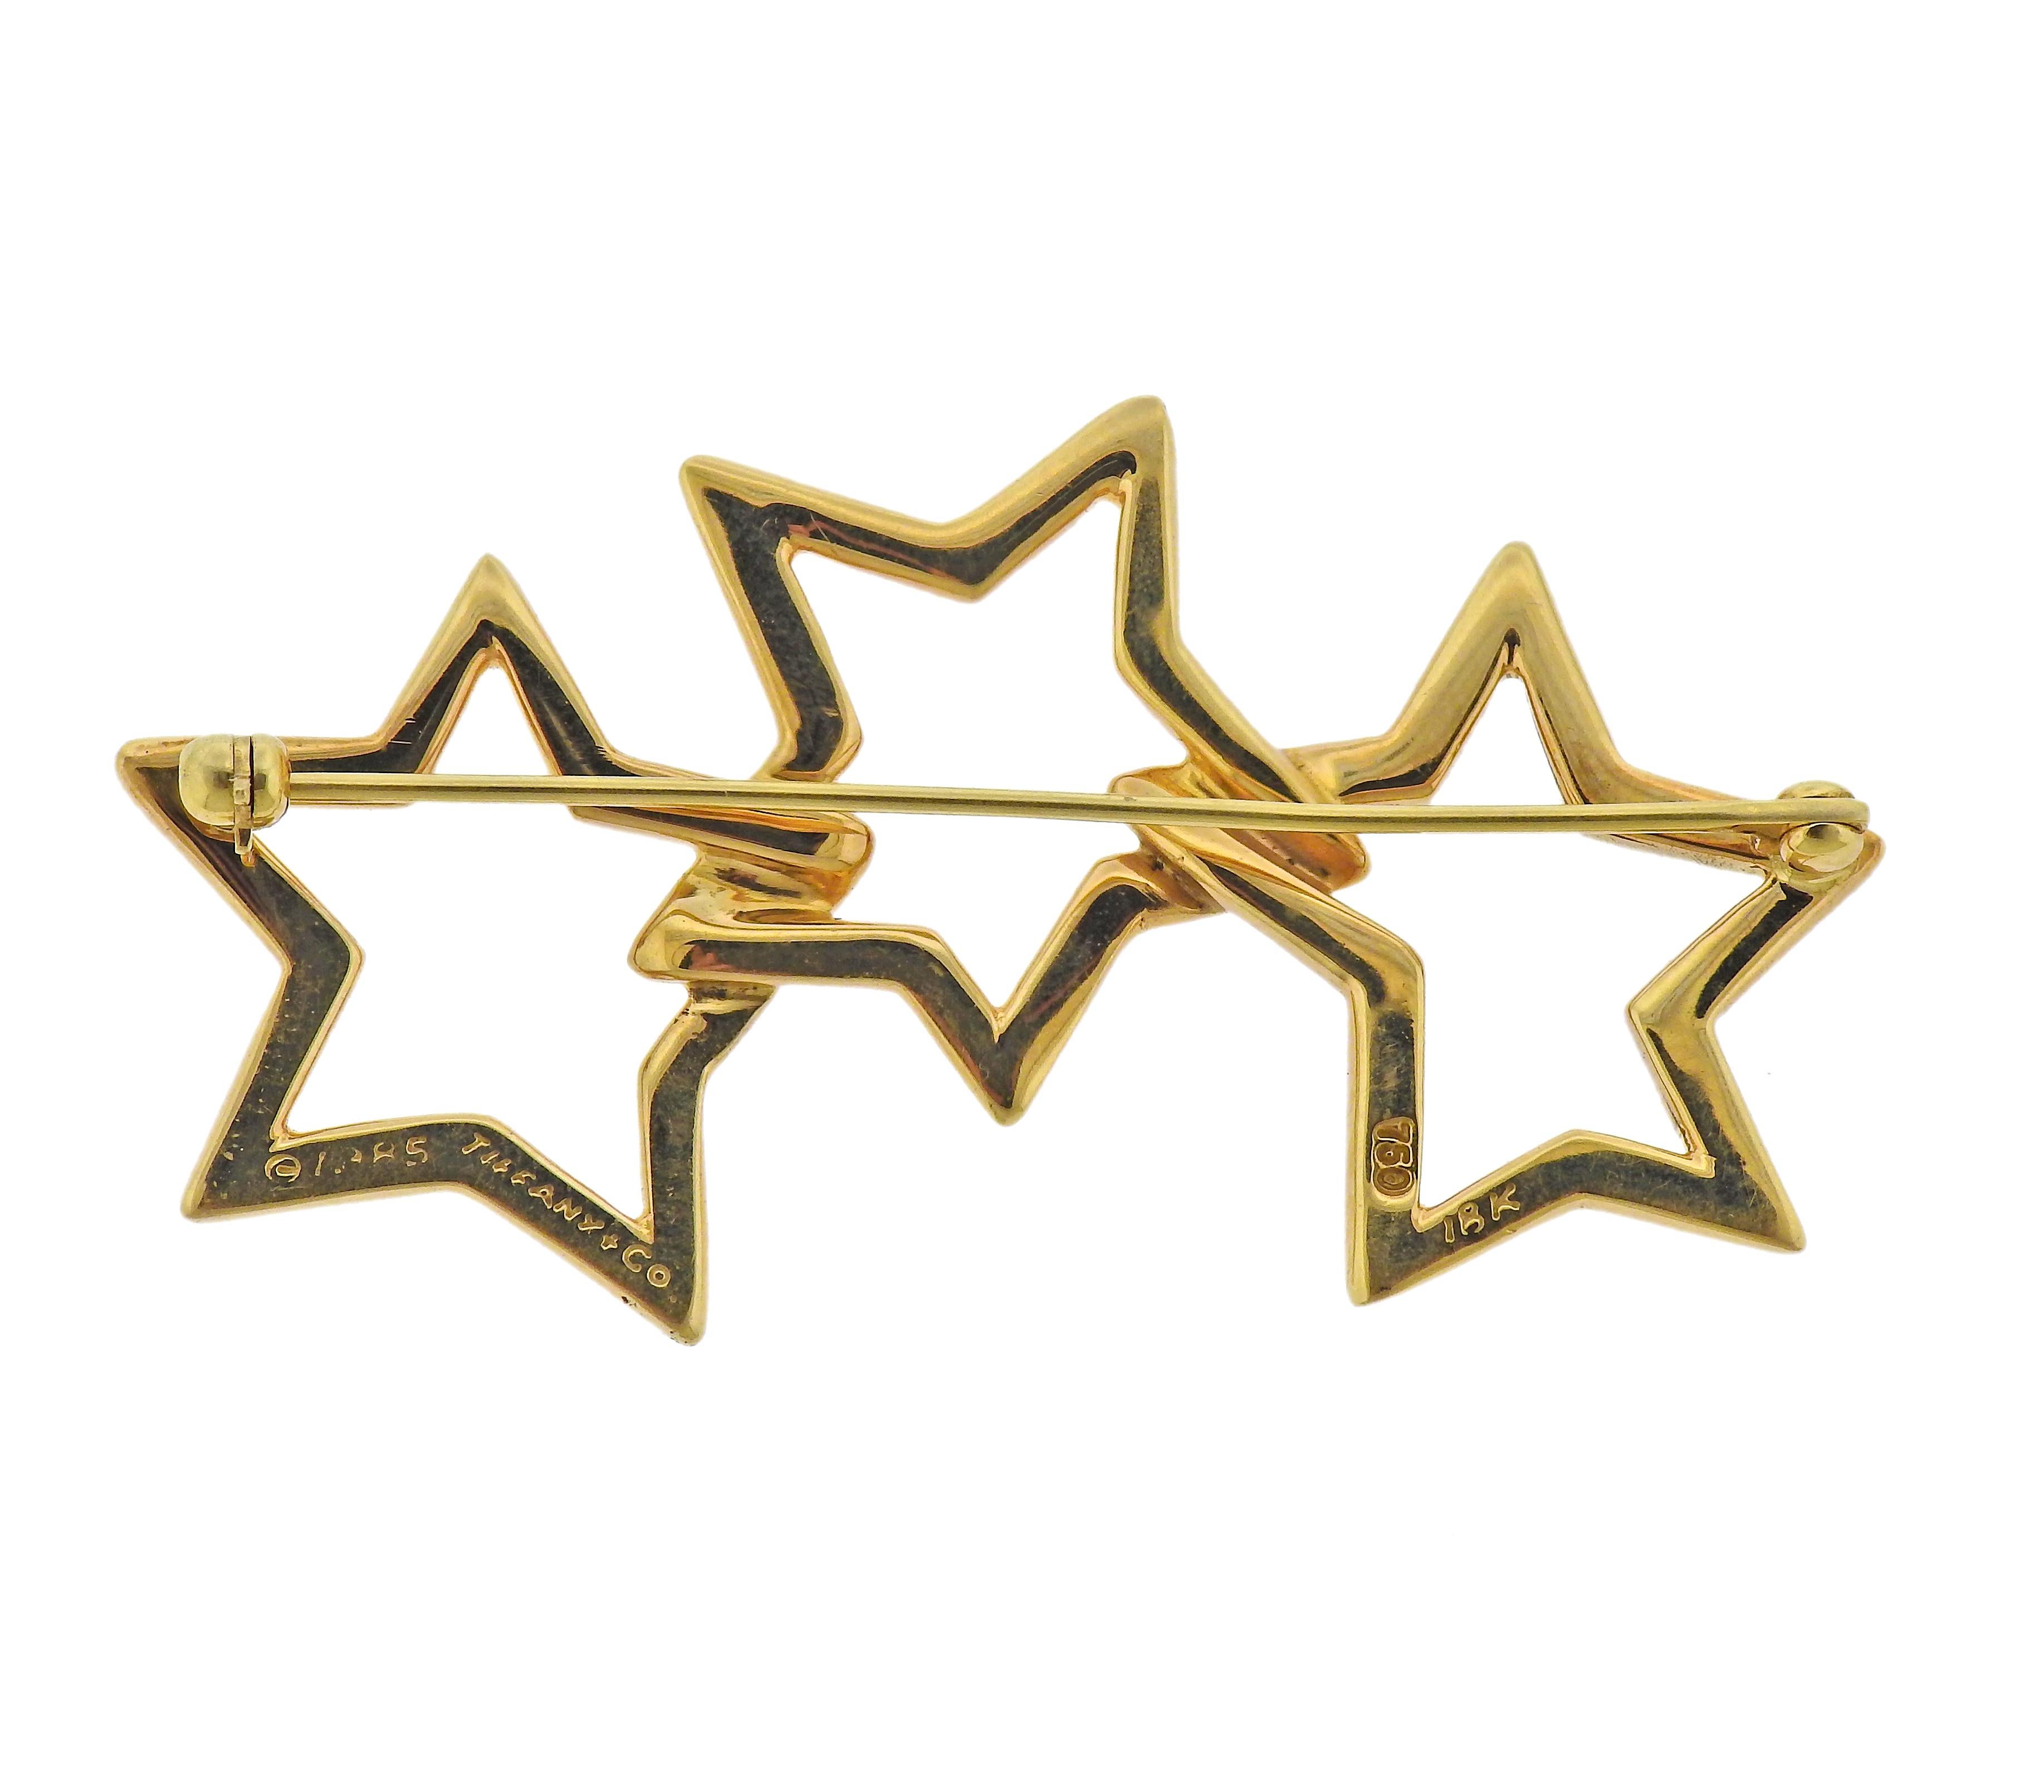 18k gold circa 1985 Tiffany & Co three stars brooch. Measuring 55mm x 28mm wide. Marked: Tiffany & Co, 18k, 1985. Weight - 12.9 grams. 